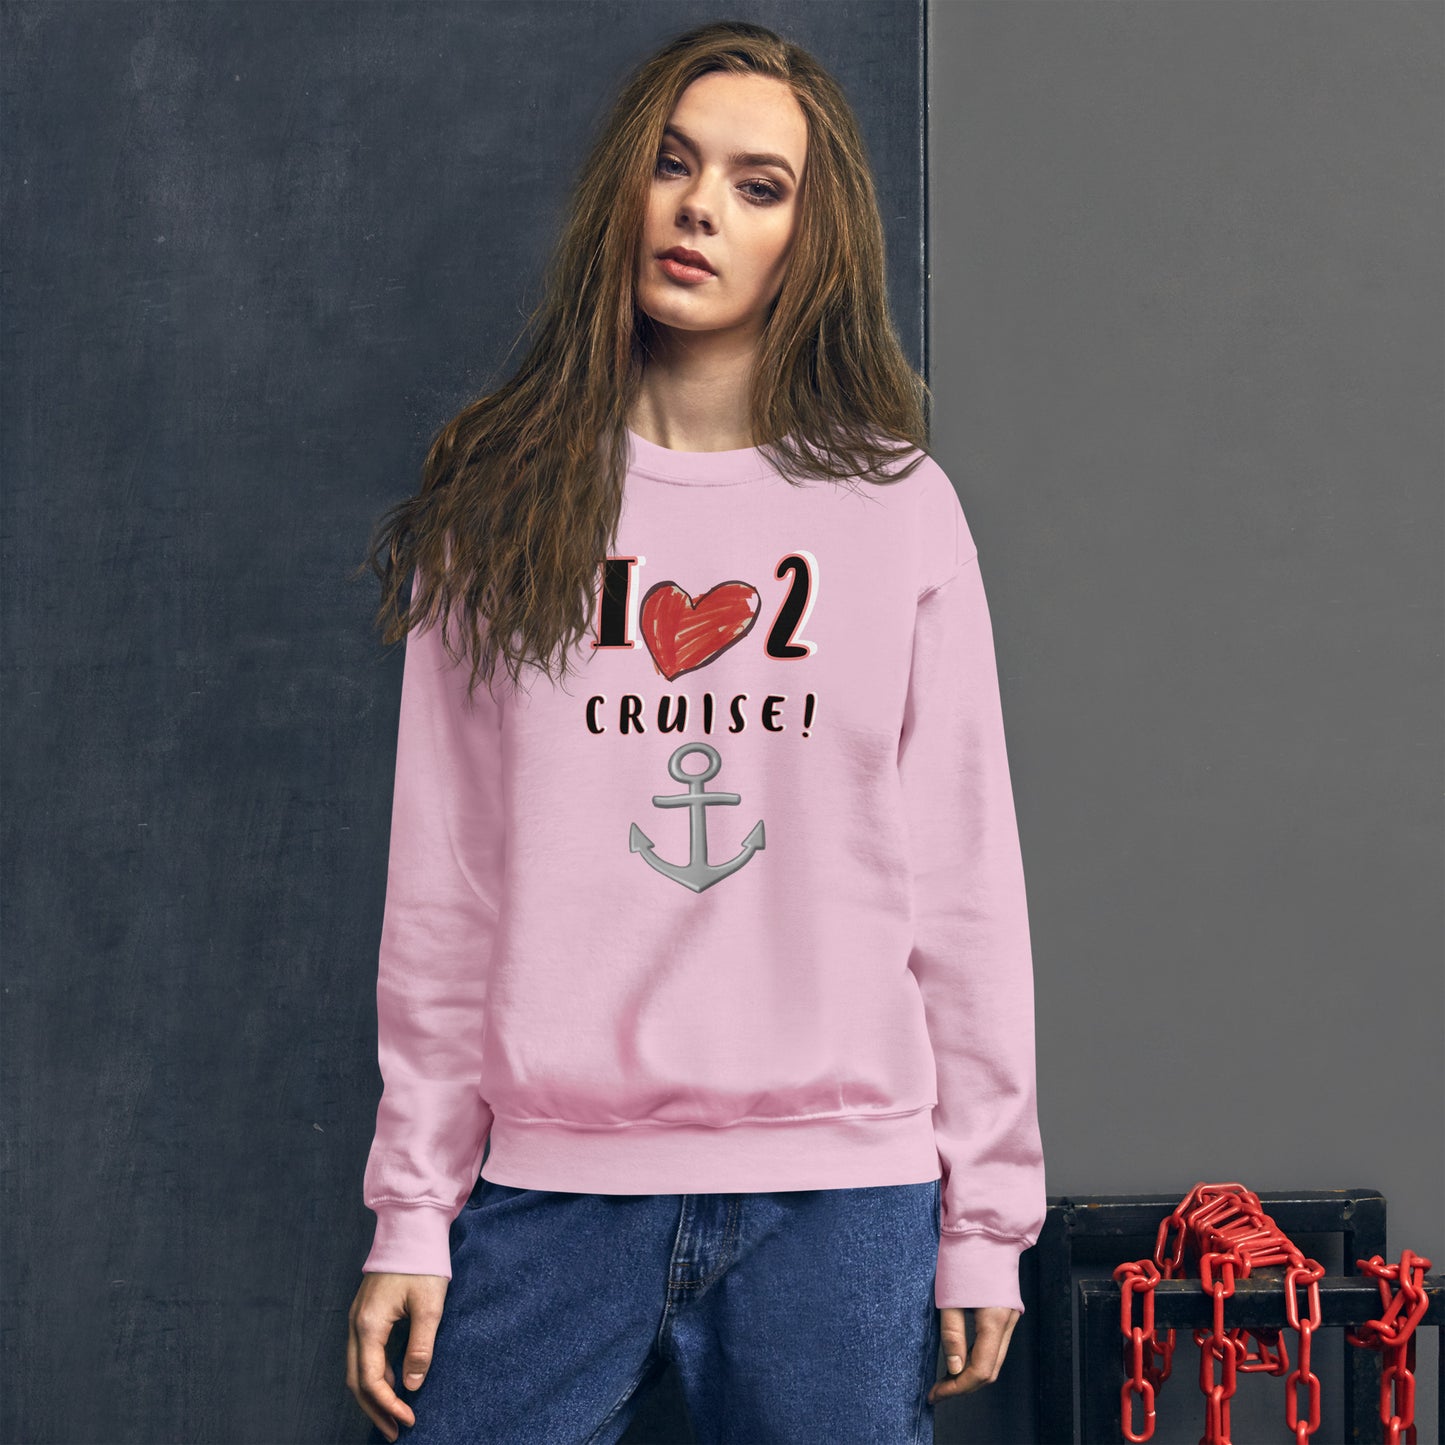 Breast Cancer Awareness "I Love 2 Cruise" Unisex Sweatshirt